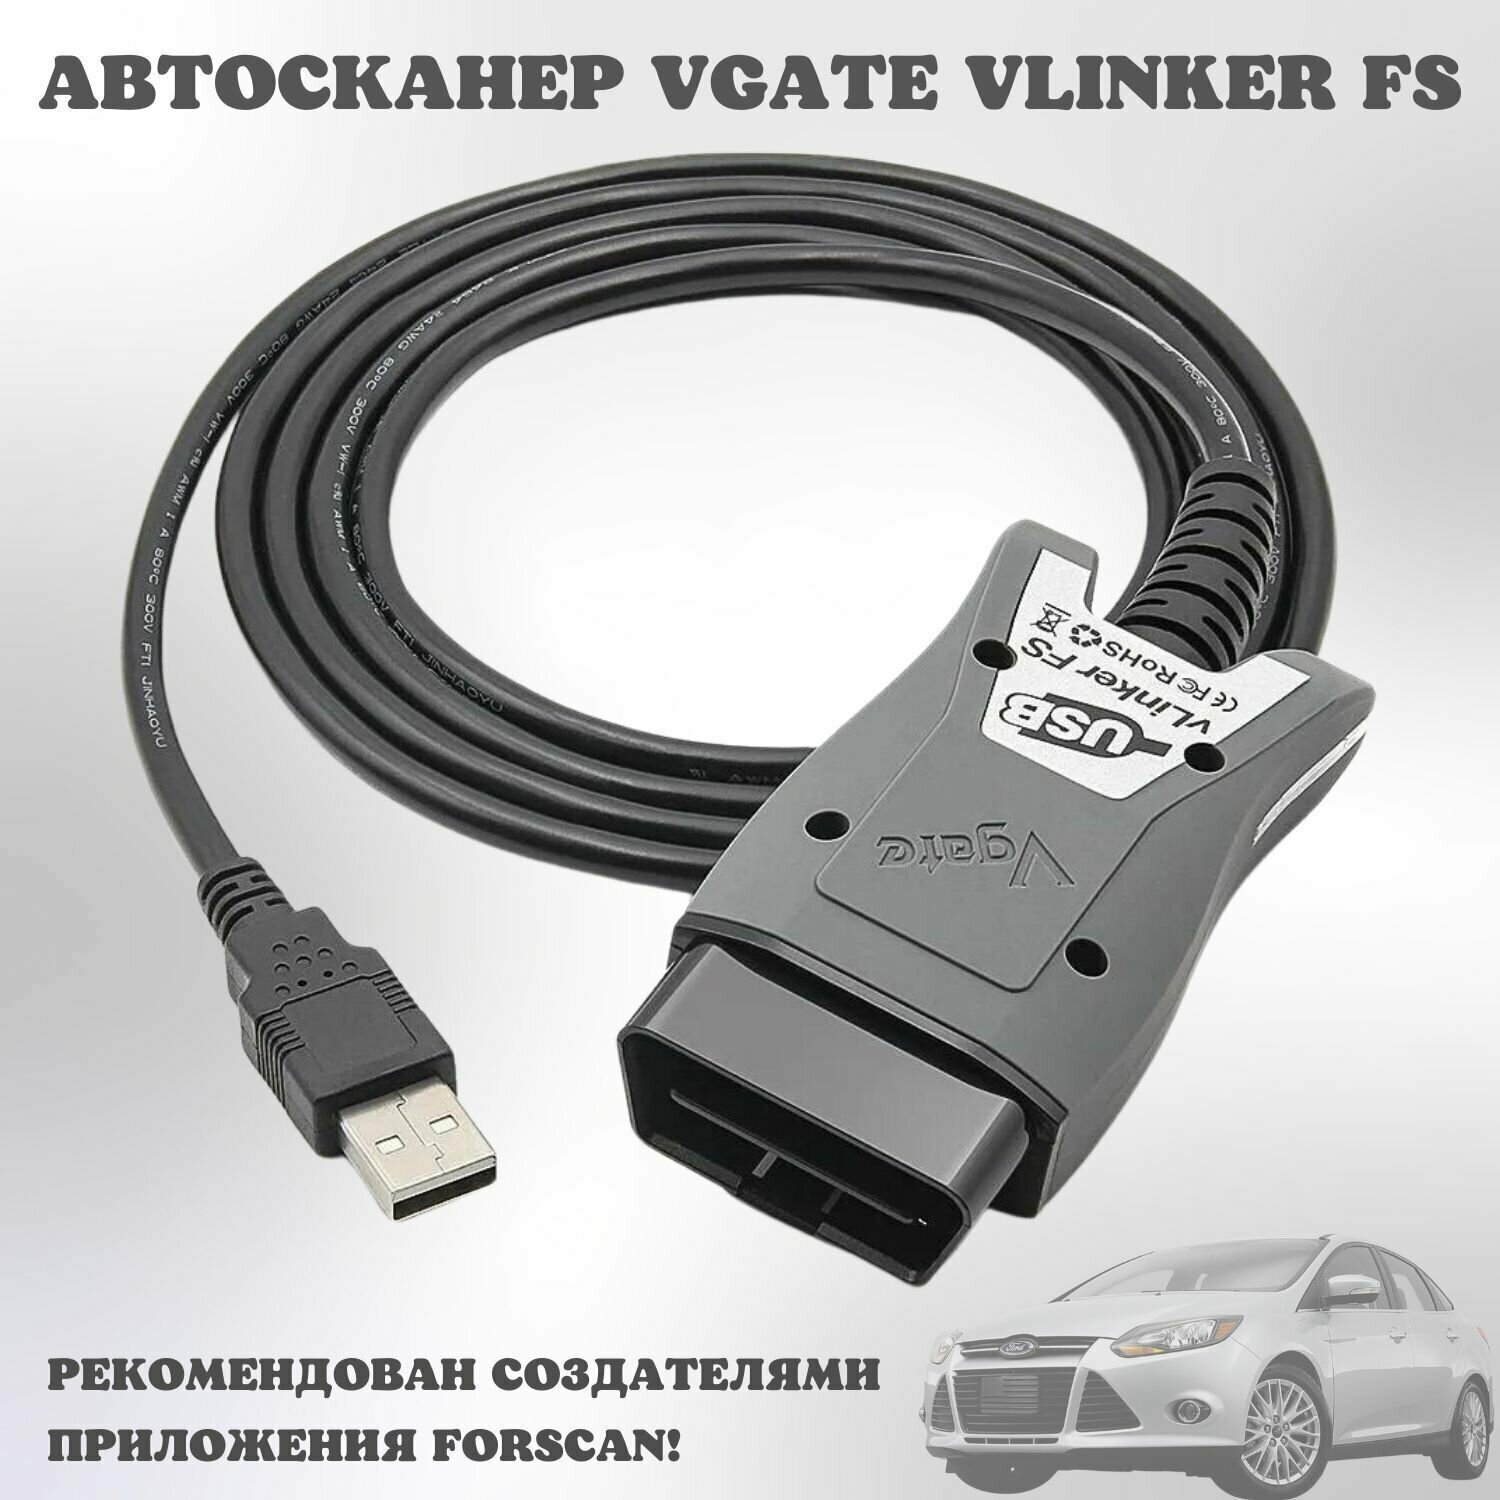 Vgate vLinker FS ELM327 - диагностический адаптер для Ford FORScan HS/MS-CAN